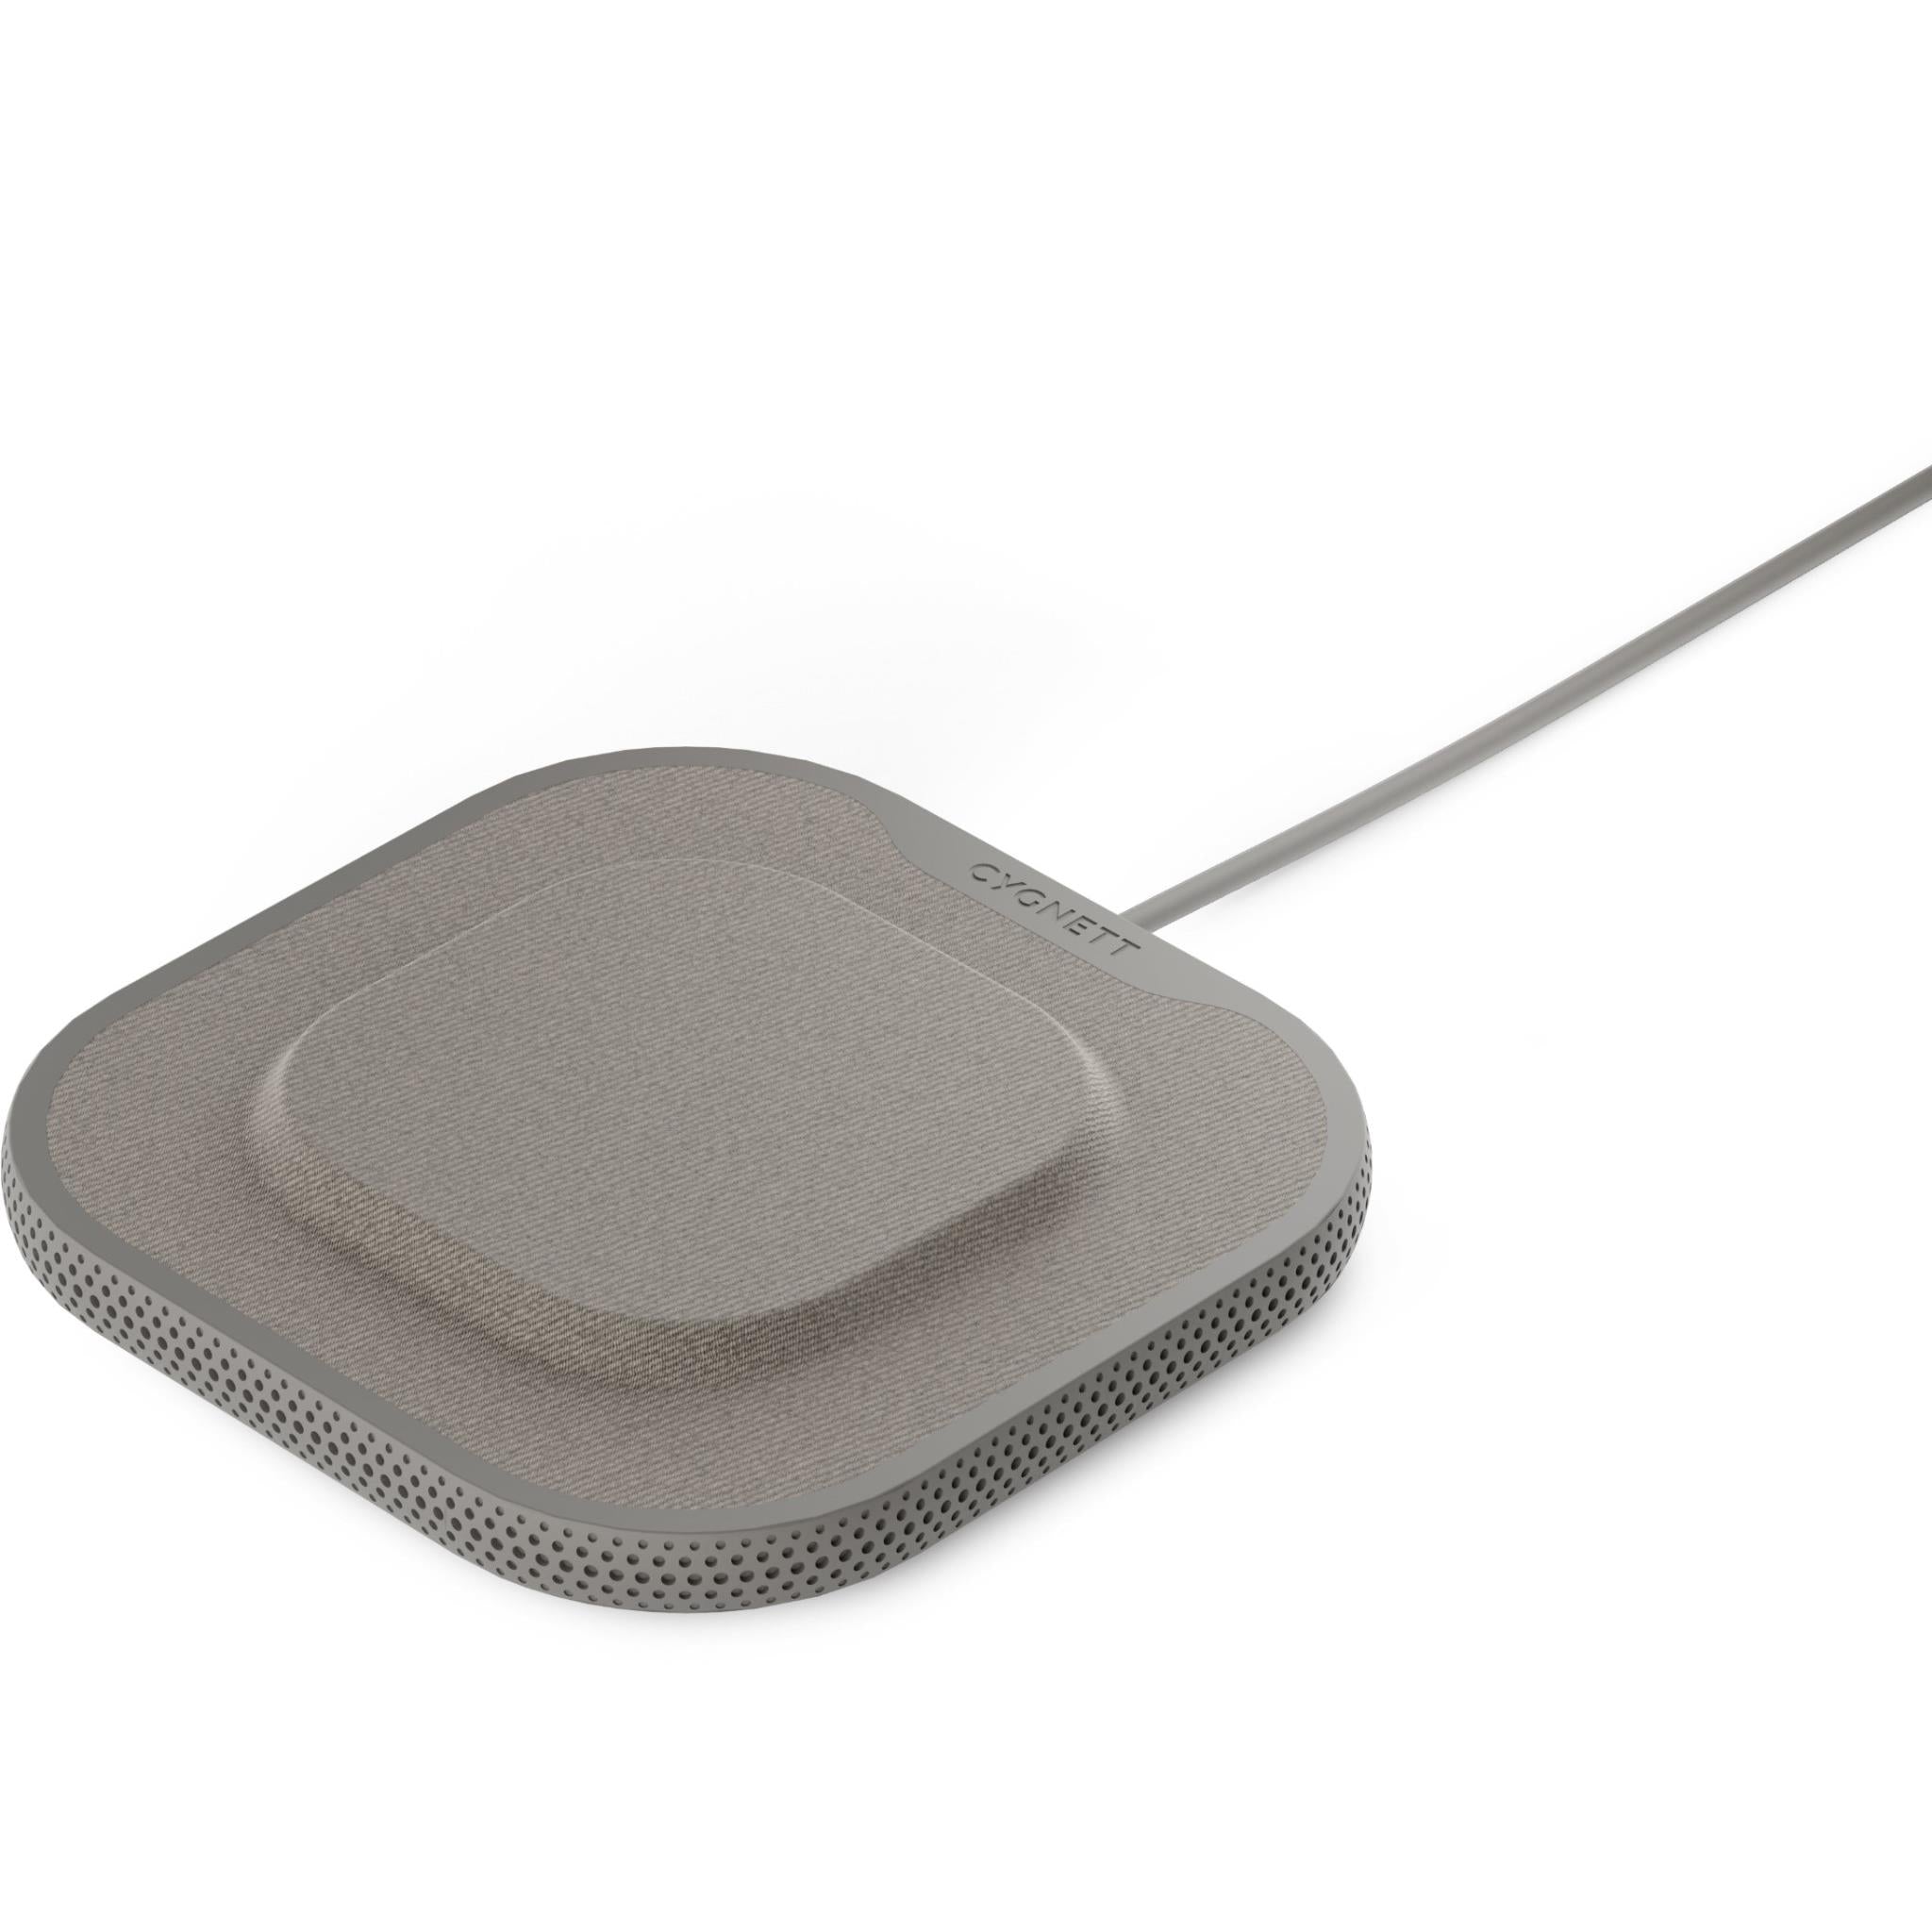 cygnett powerbase iii 15w wireless charger (grey)